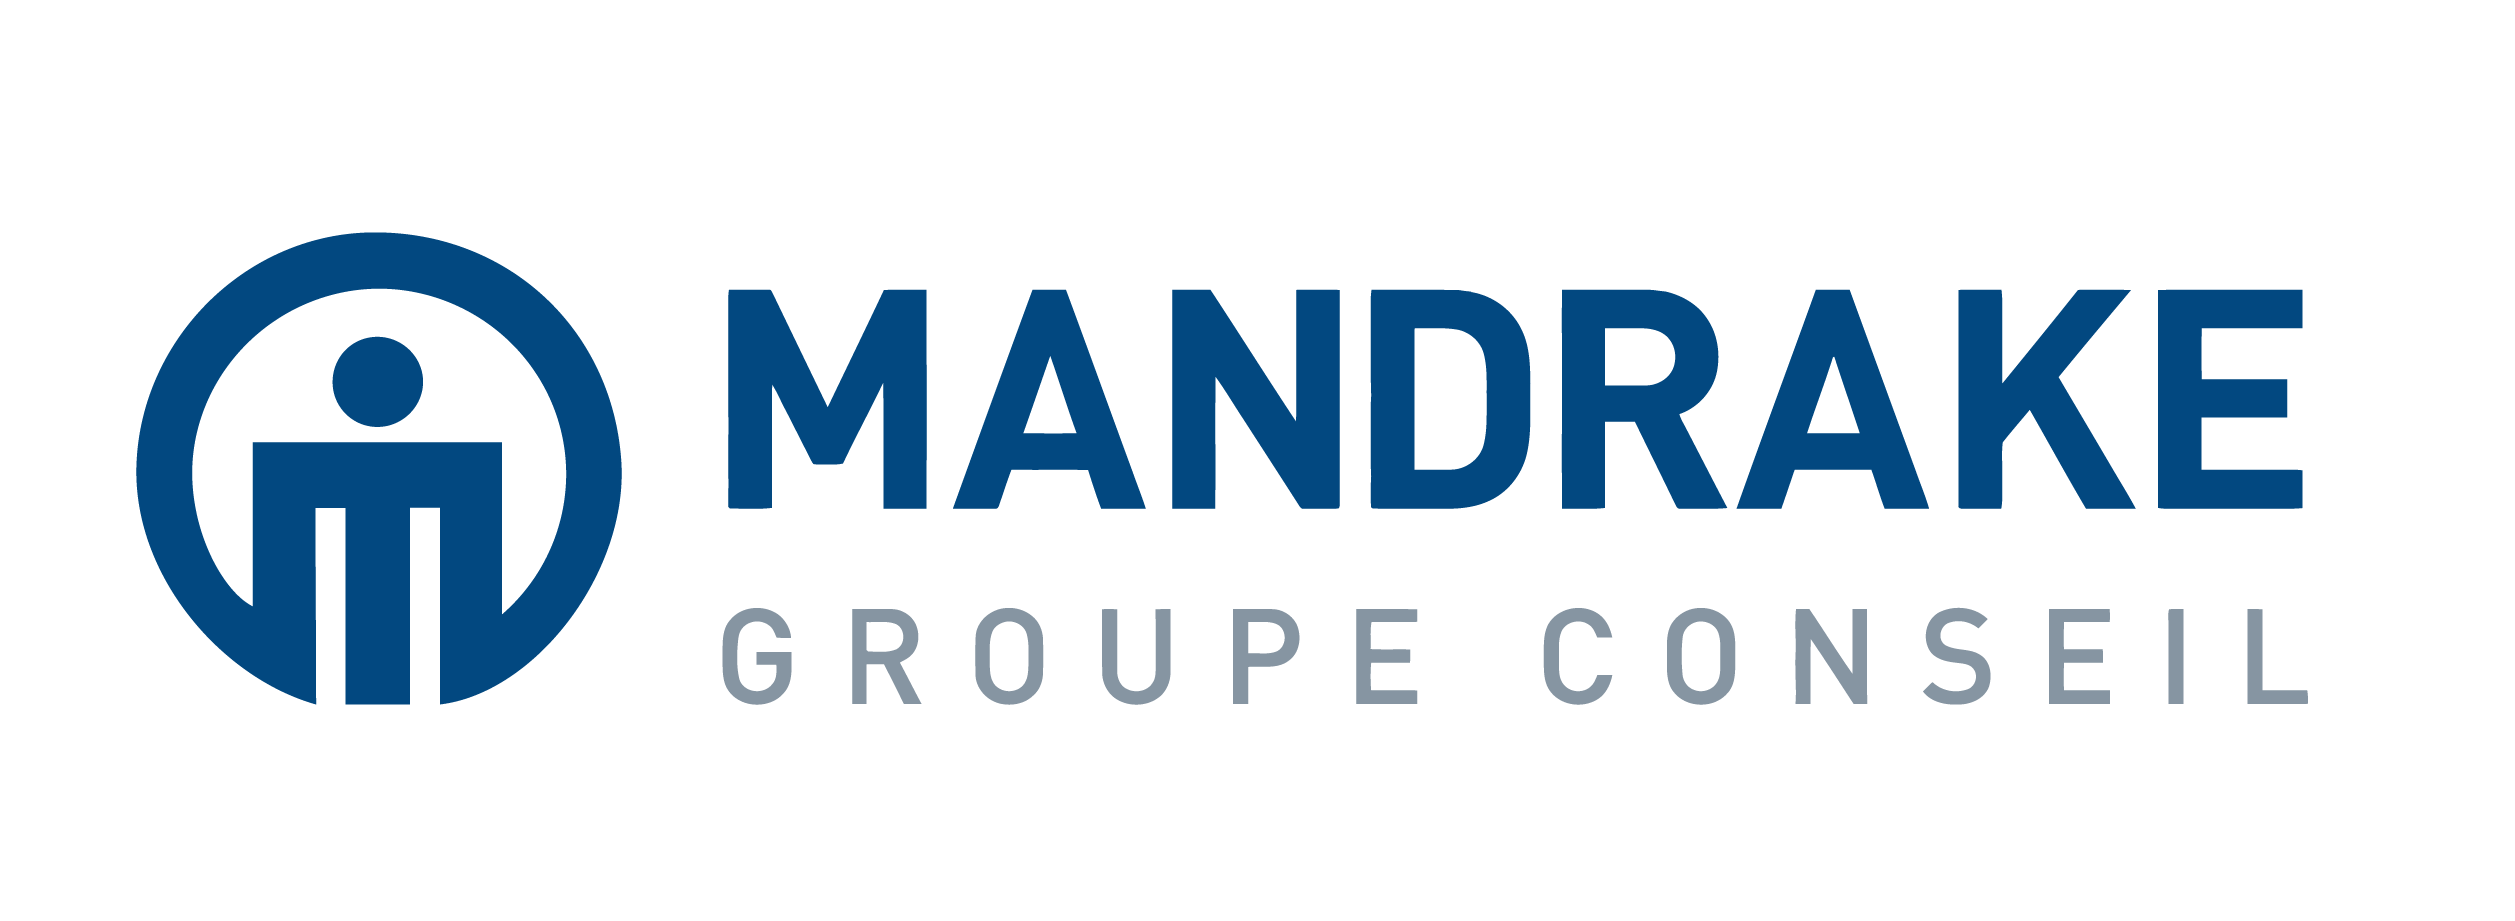 Mandrake Groupe Conseil